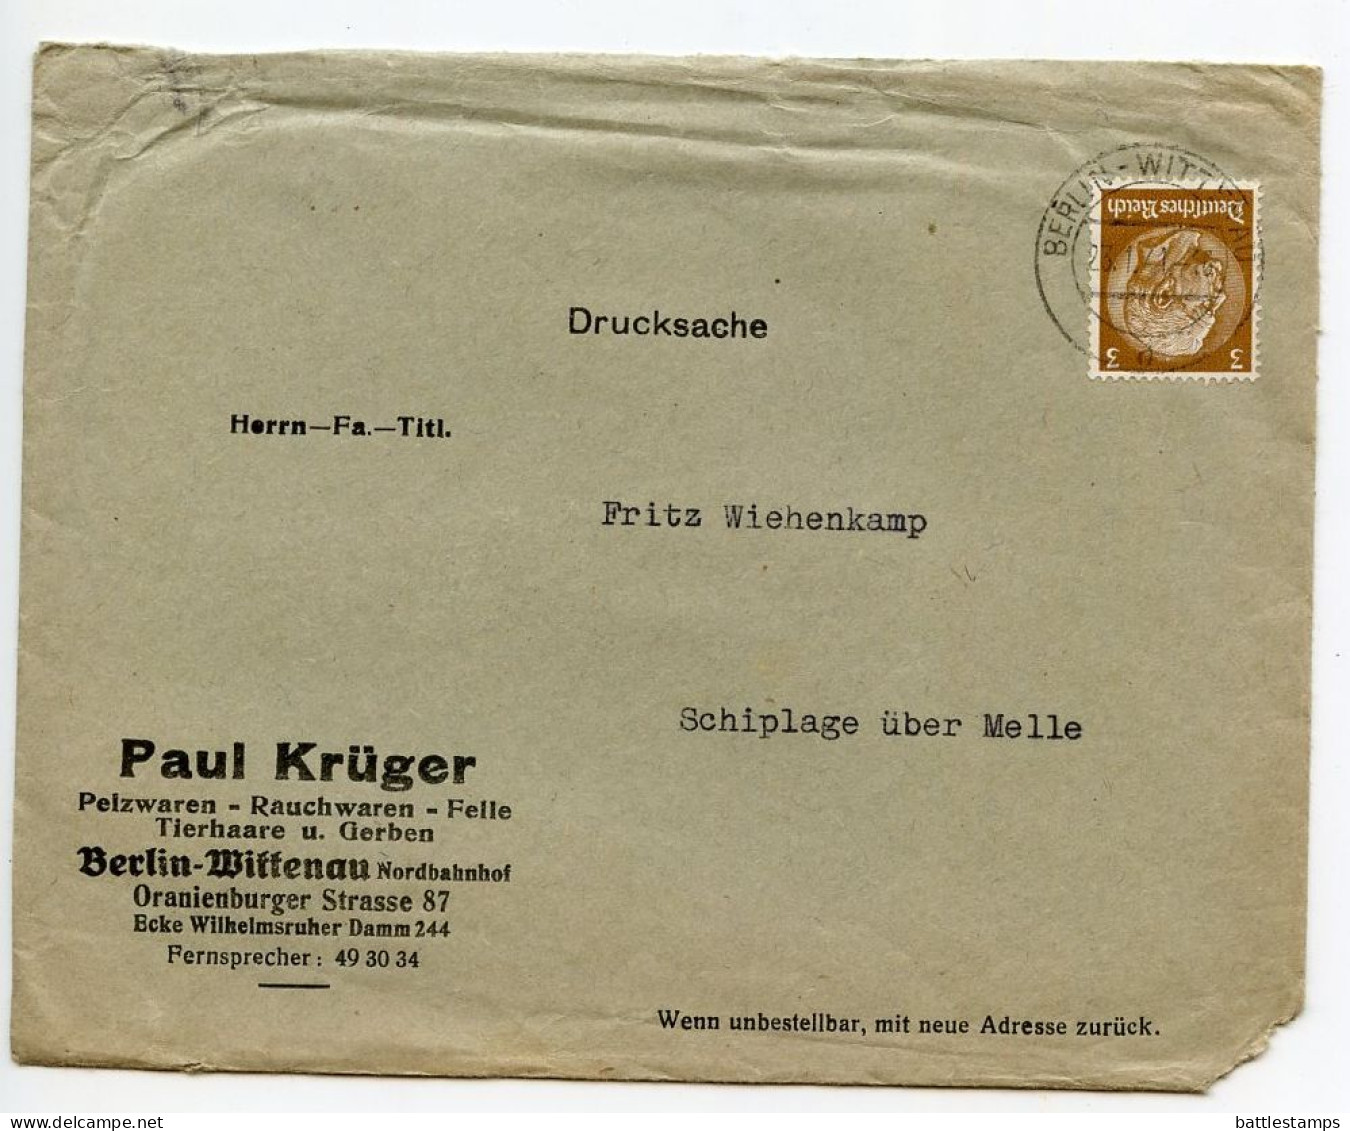 Germany 1941 Cover & Price Lists; Berlin-Wittenau - Paul Krüger, Pelzwaren-Rauchwaren-Felle; 3pf. Hindenburg - Storia Postale